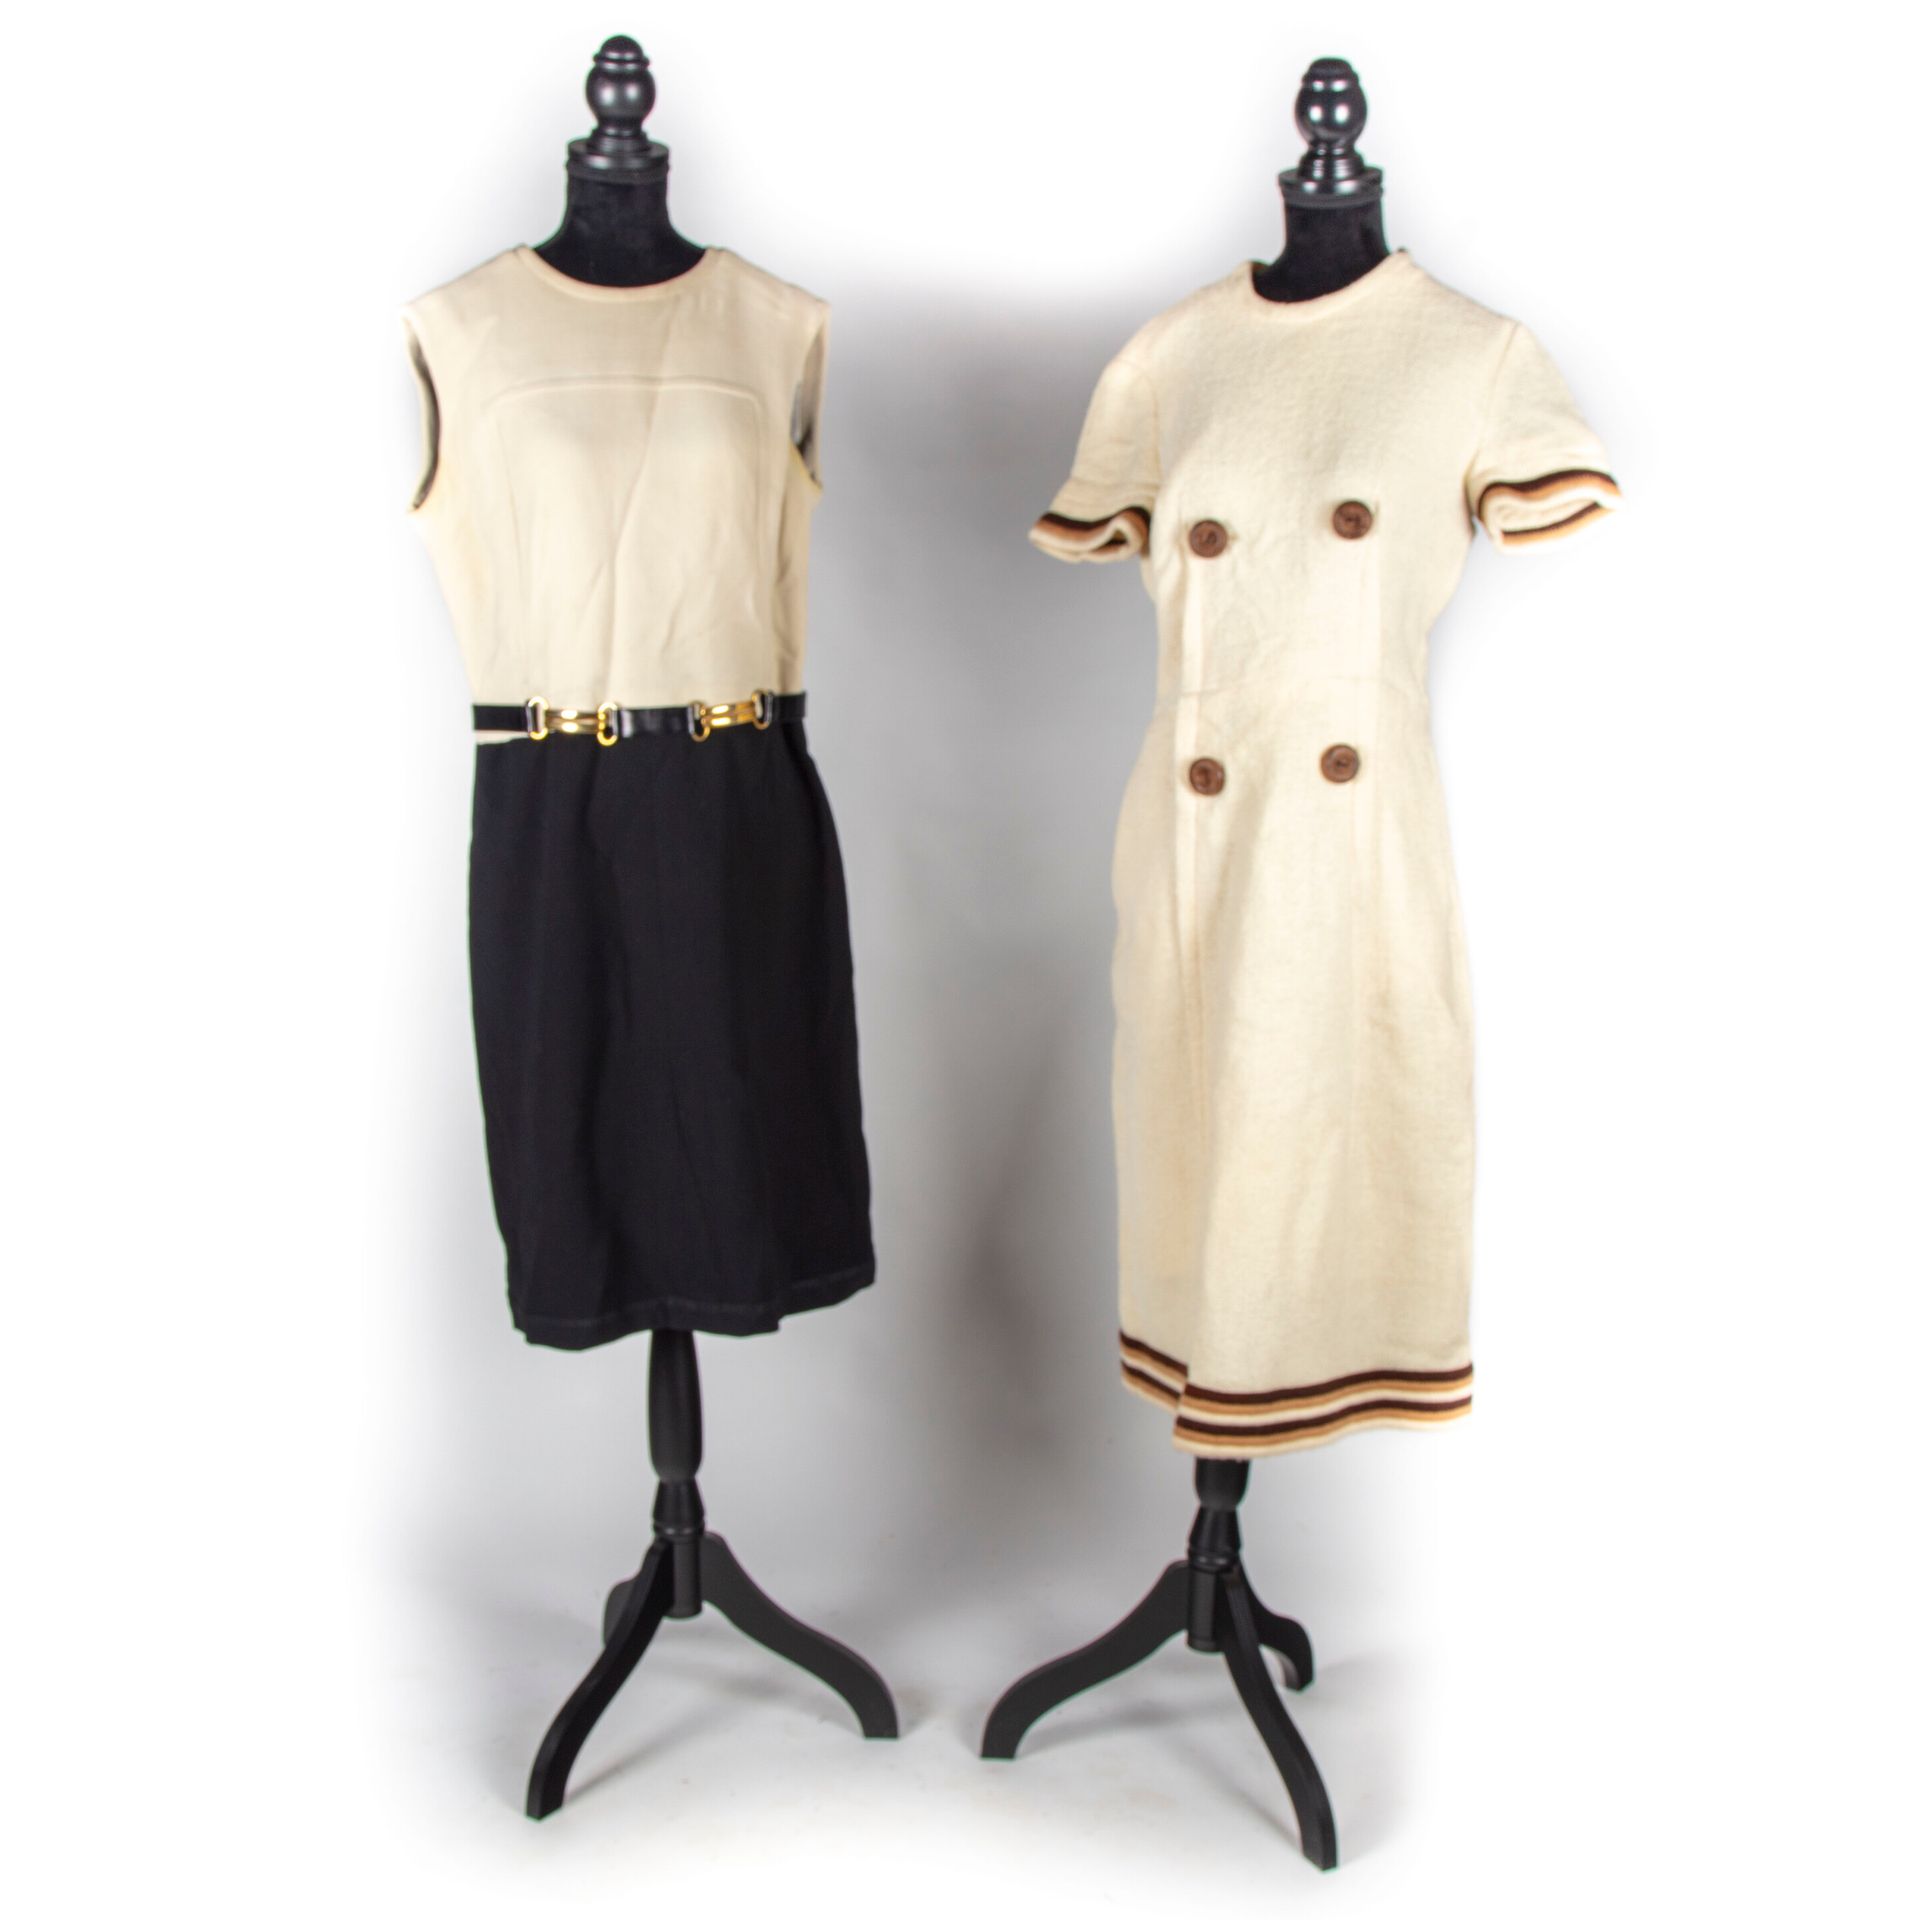 Null 皮埃尔-巴尔曼 - 巴黎

两天的裙子--20世纪60年代。

带条纹辫子的乳白色毛织品裙子

带腰带的双色羊毛裙

刮伤

磨损很小